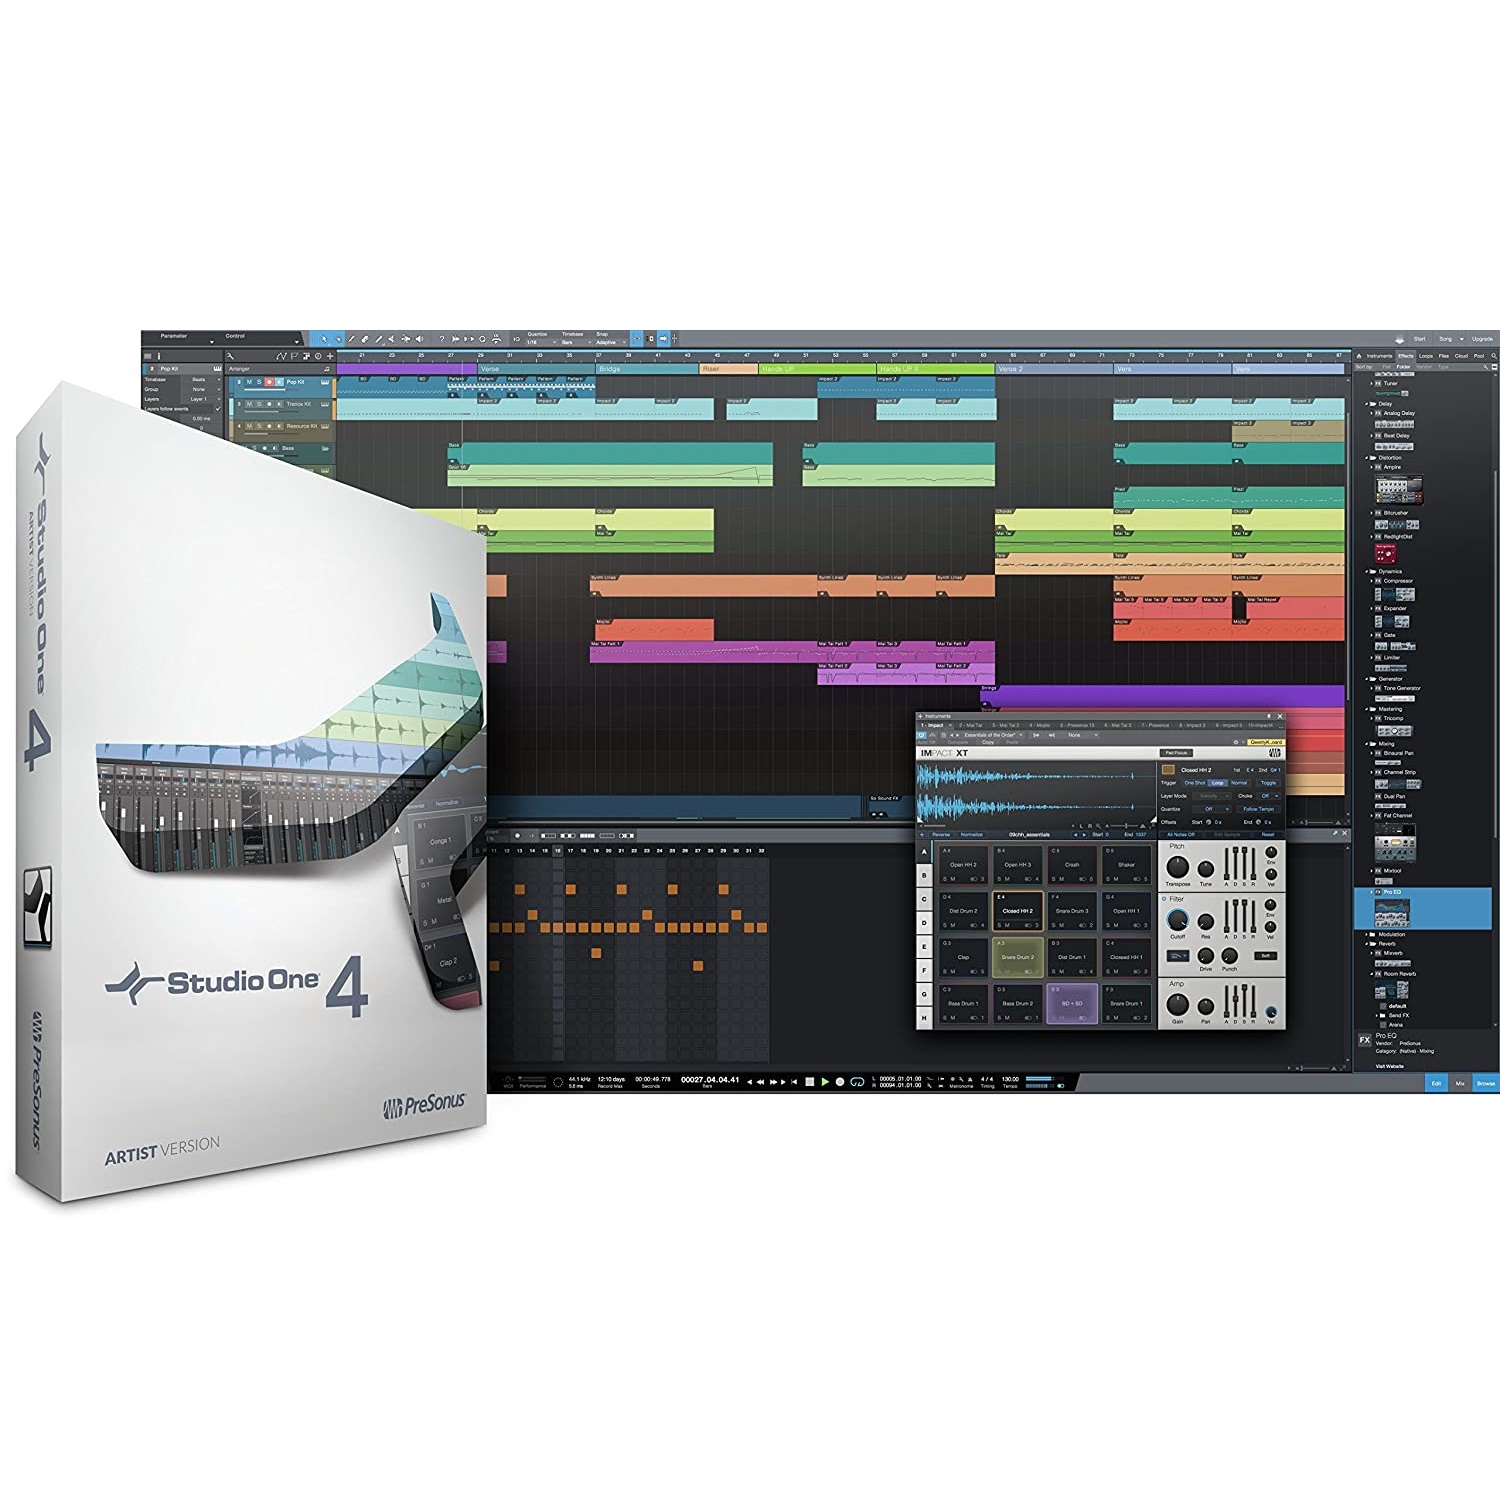 PreSonus Studio 26 - 2x4 192 kHz, USB 2.0 Audio Interface